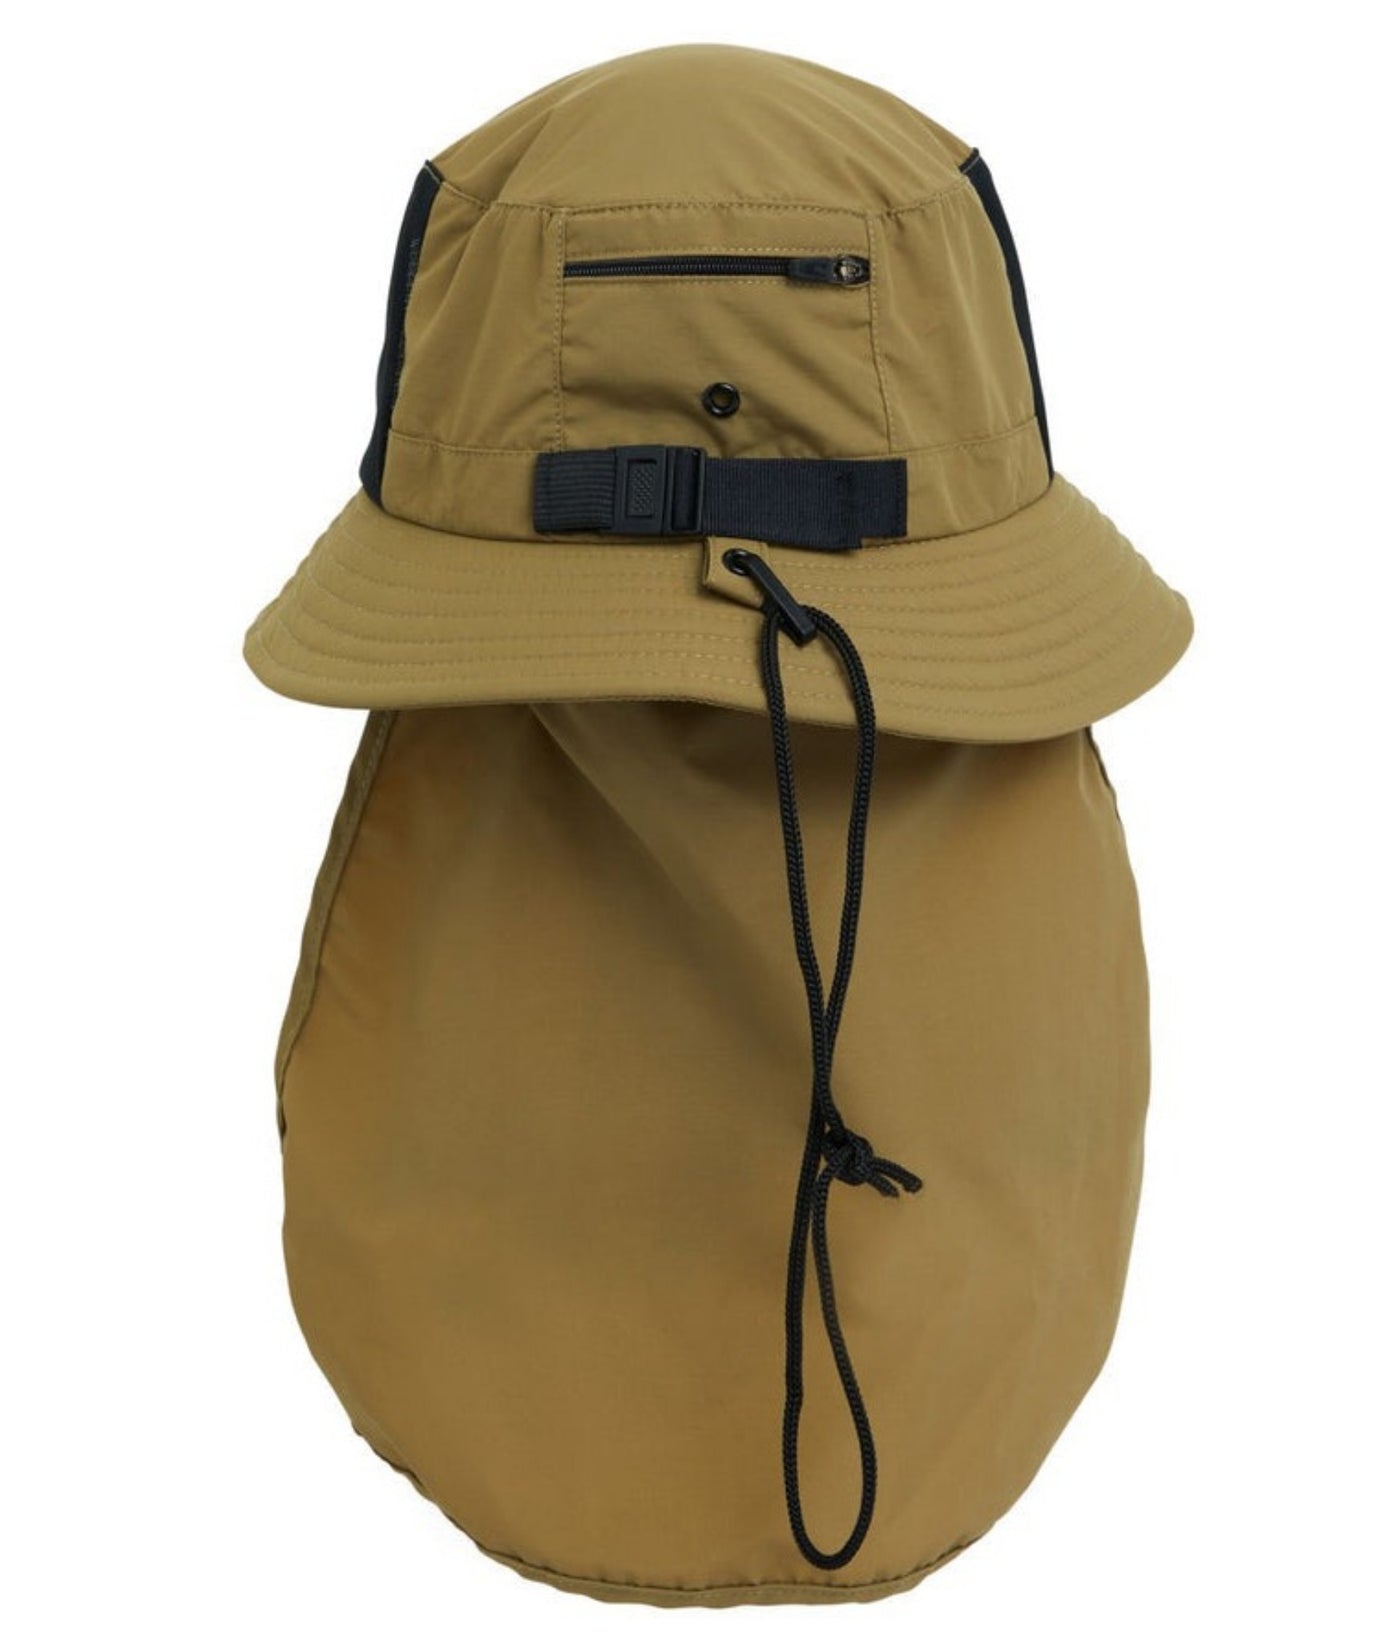 O'Neill Men's Eclipse Bucket Hat - Khaki